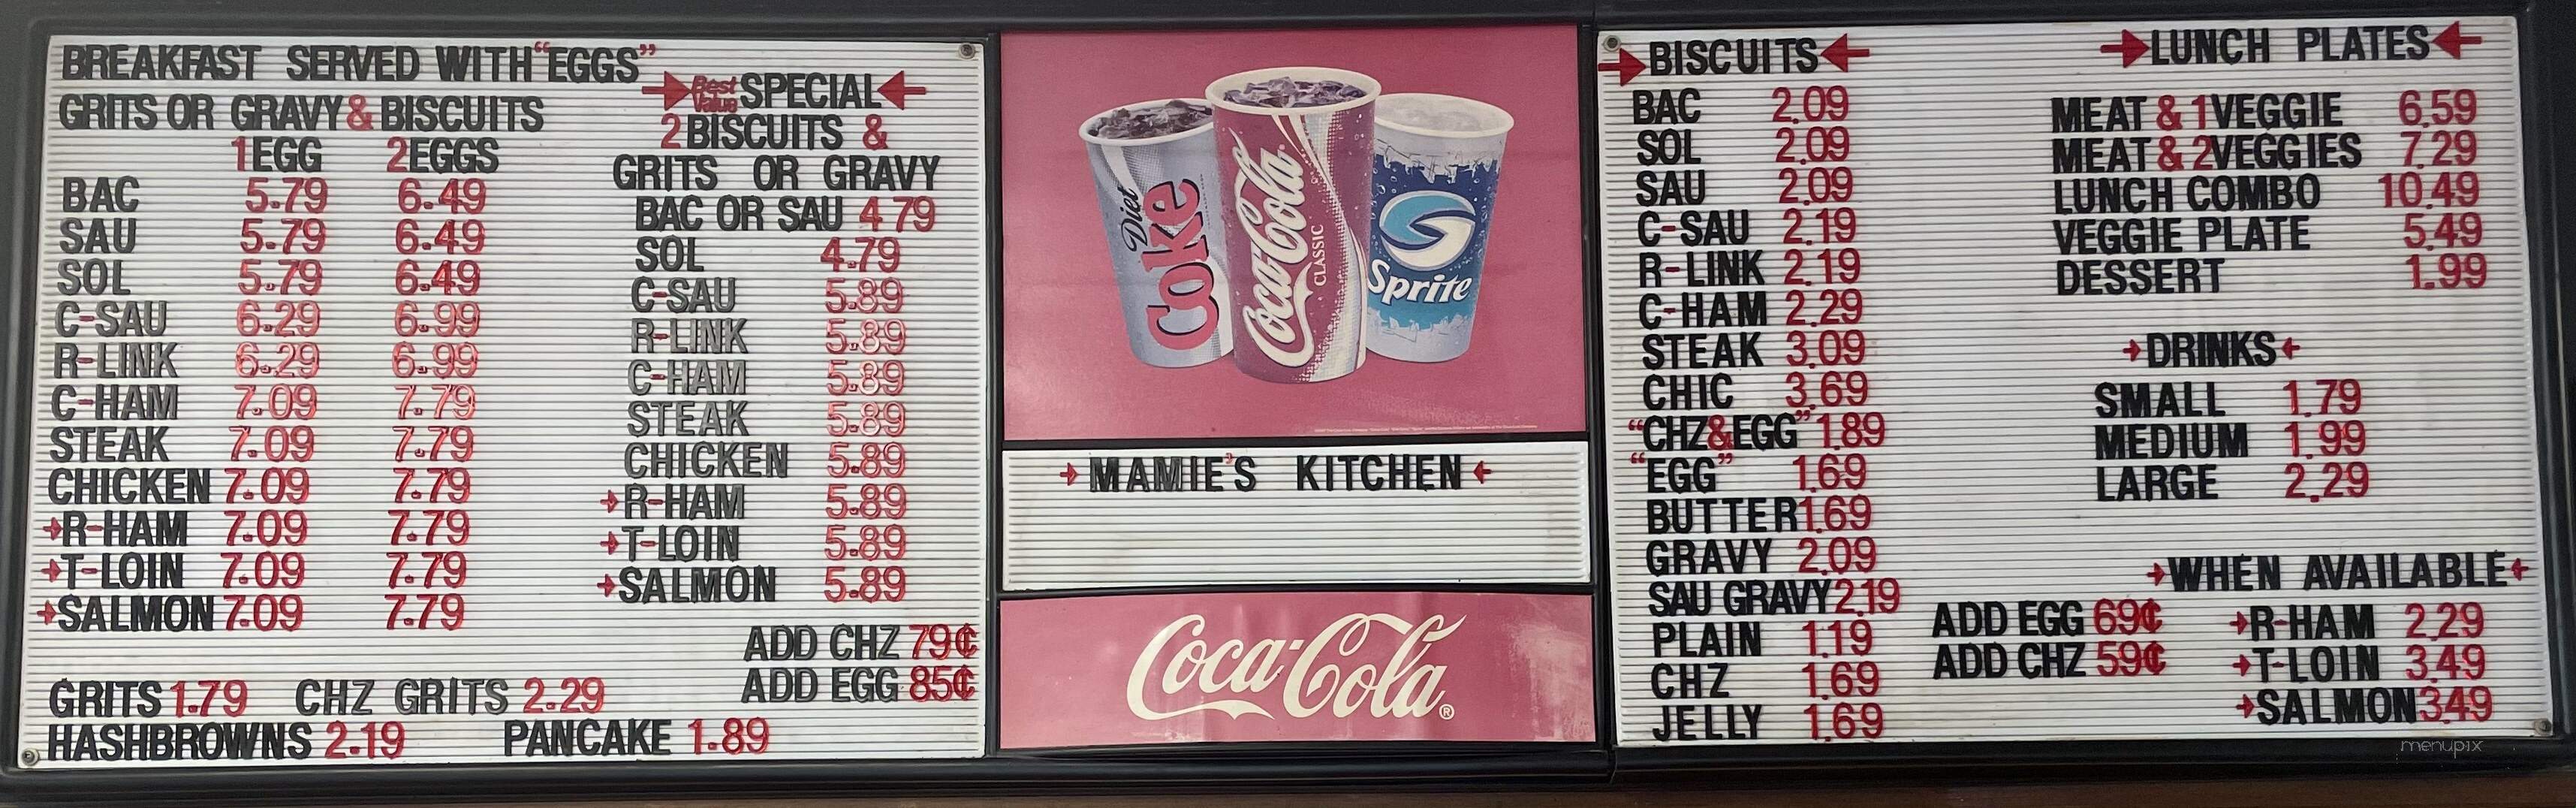 Mamie's Kitchen Biscuits - Covington, GA